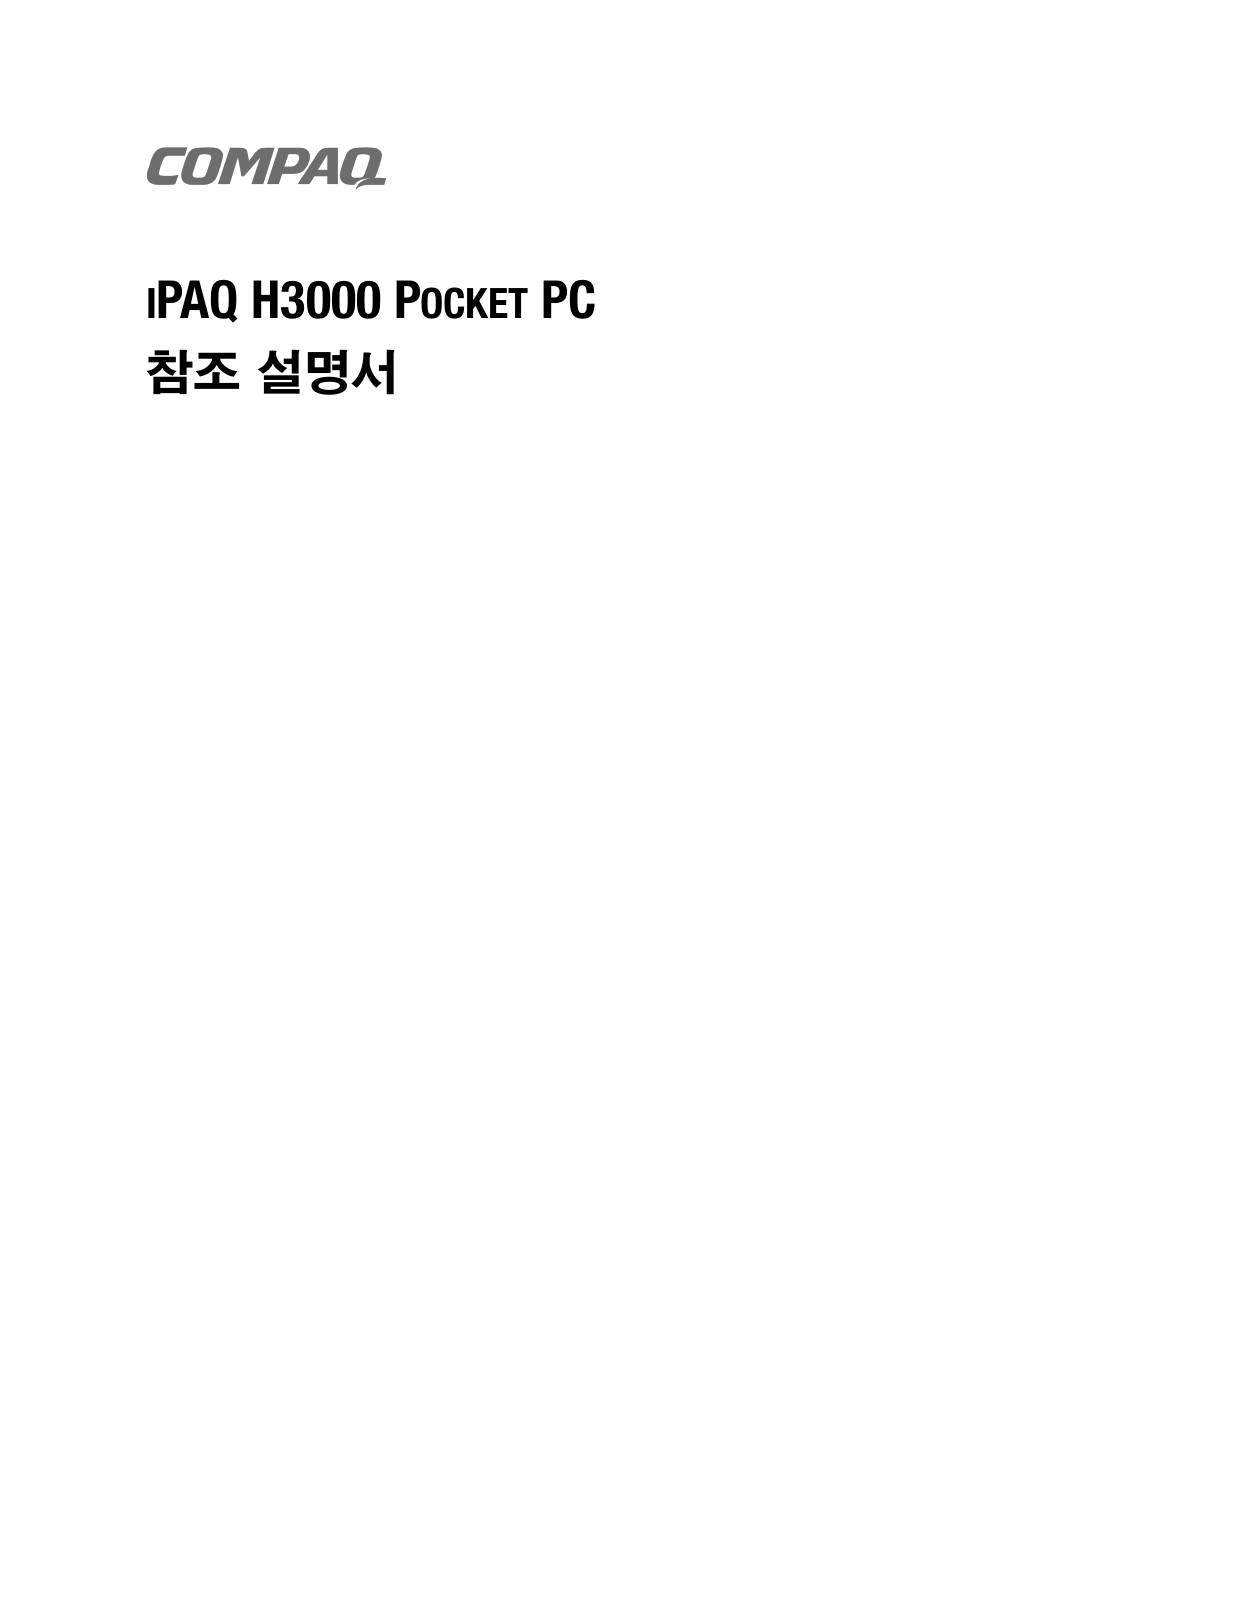 Hp IPAQ H3900 POCKET, IPAQ H3800 POCKET PC, COMPAQ IPAQ H3000 Manual